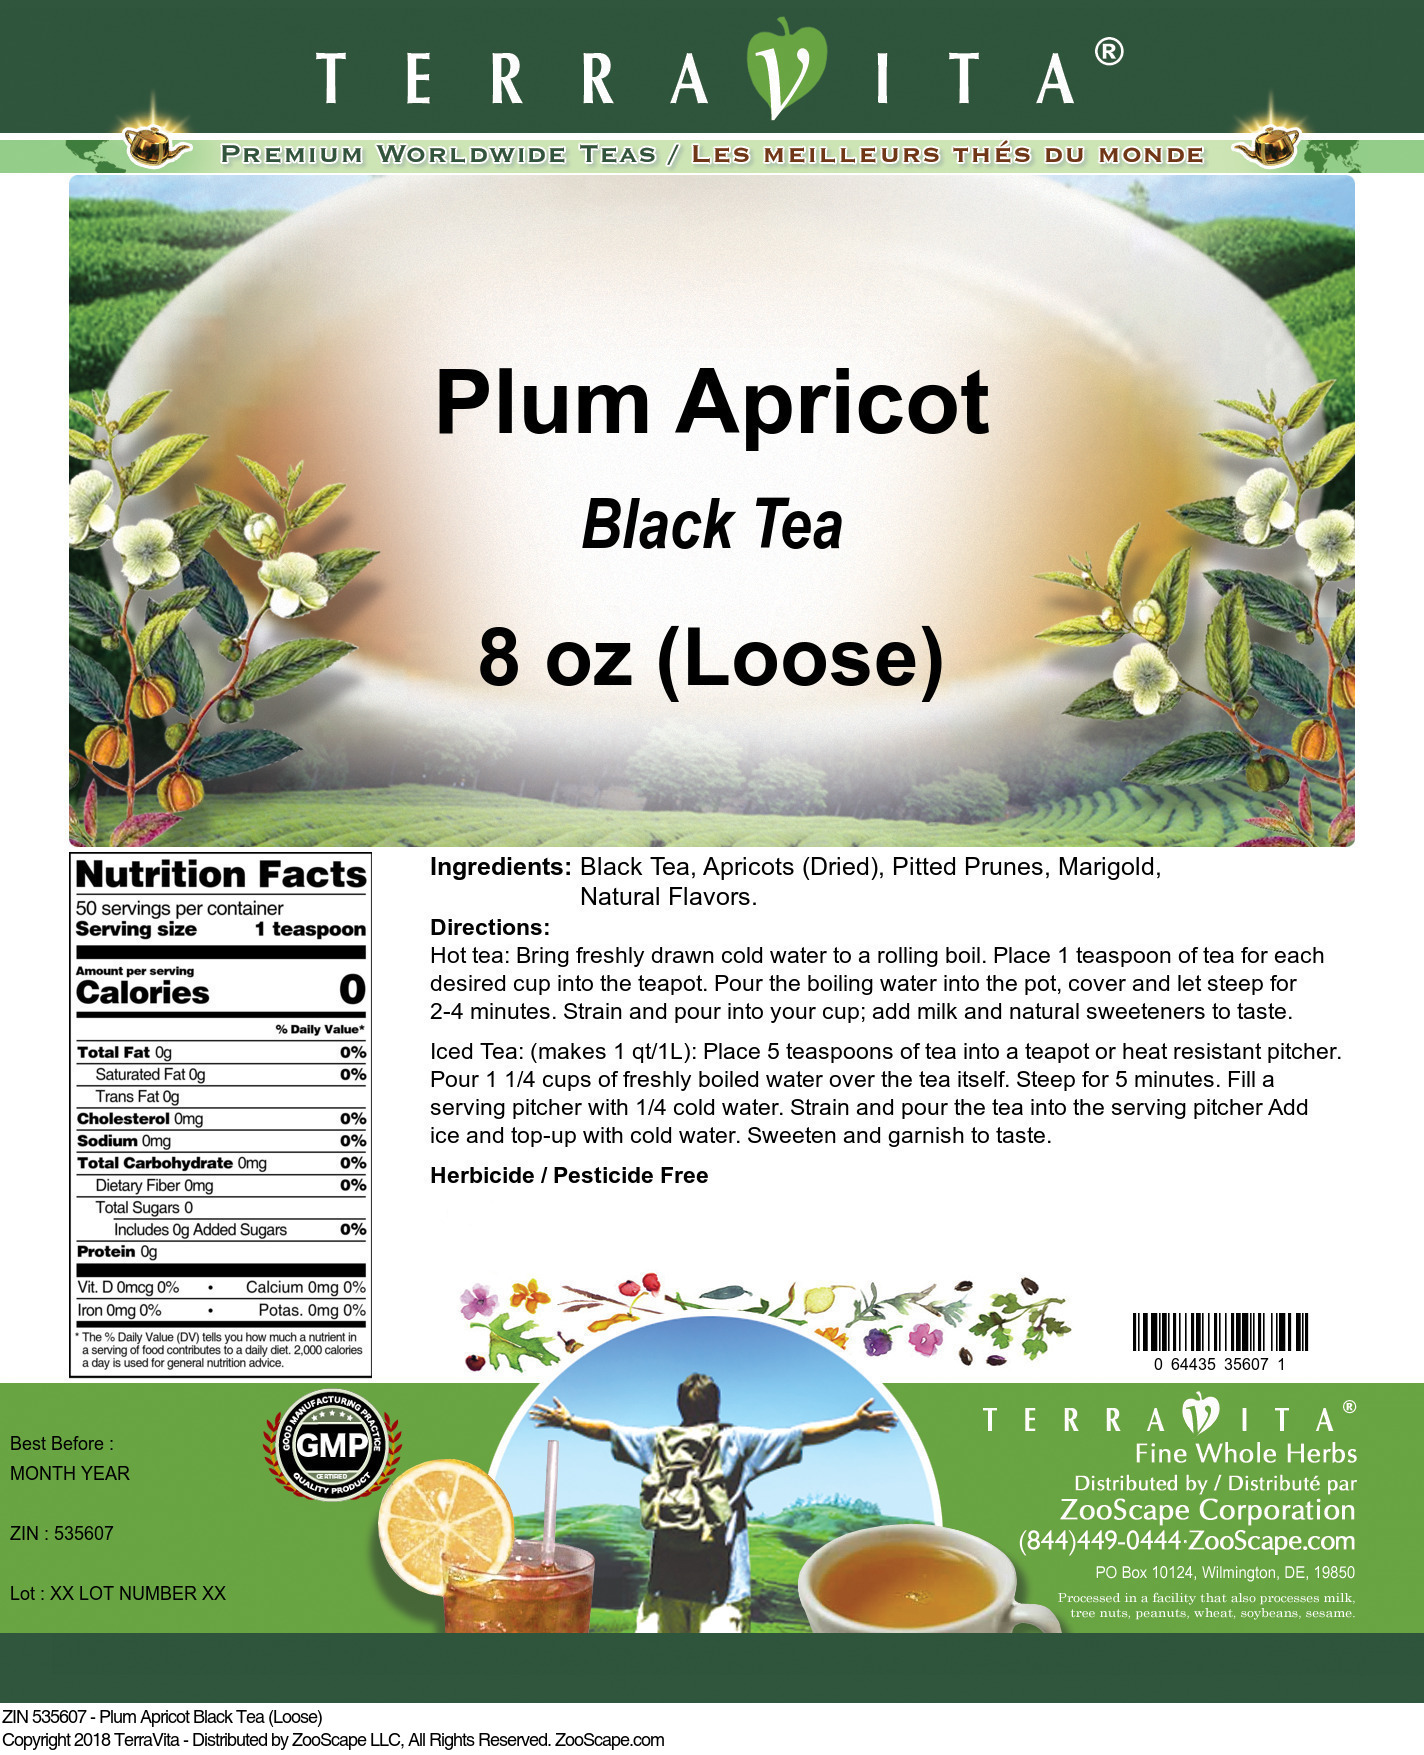 Plum Apricot Black Tea (Loose) - Label